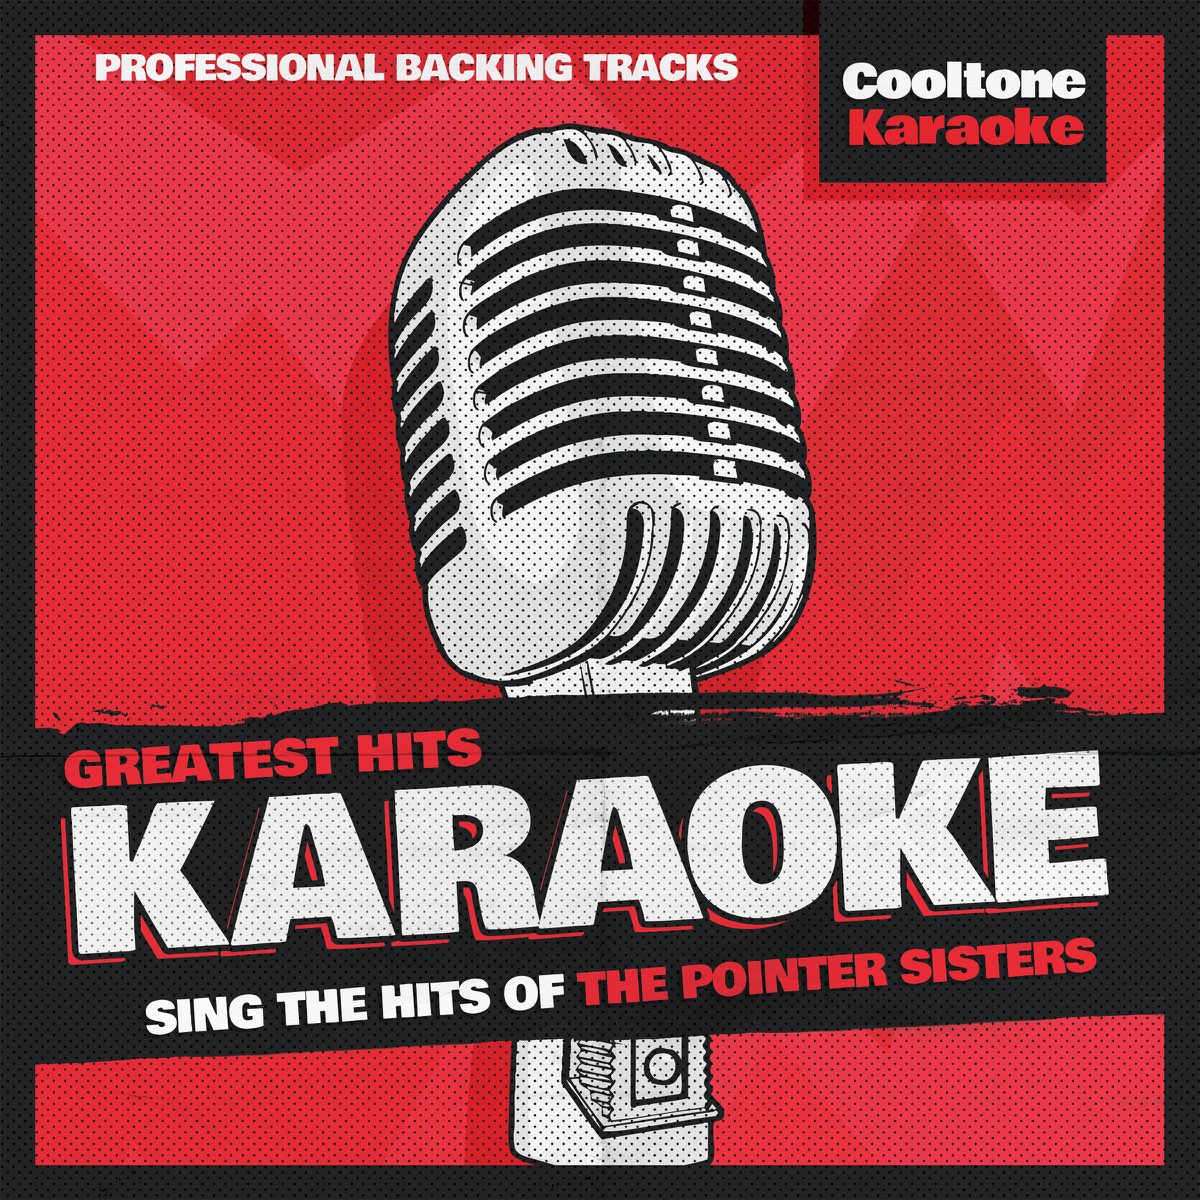 Greatest Hits Karaoke: The Pointer Sisters by Cooltone Karaoke on Apple  Music